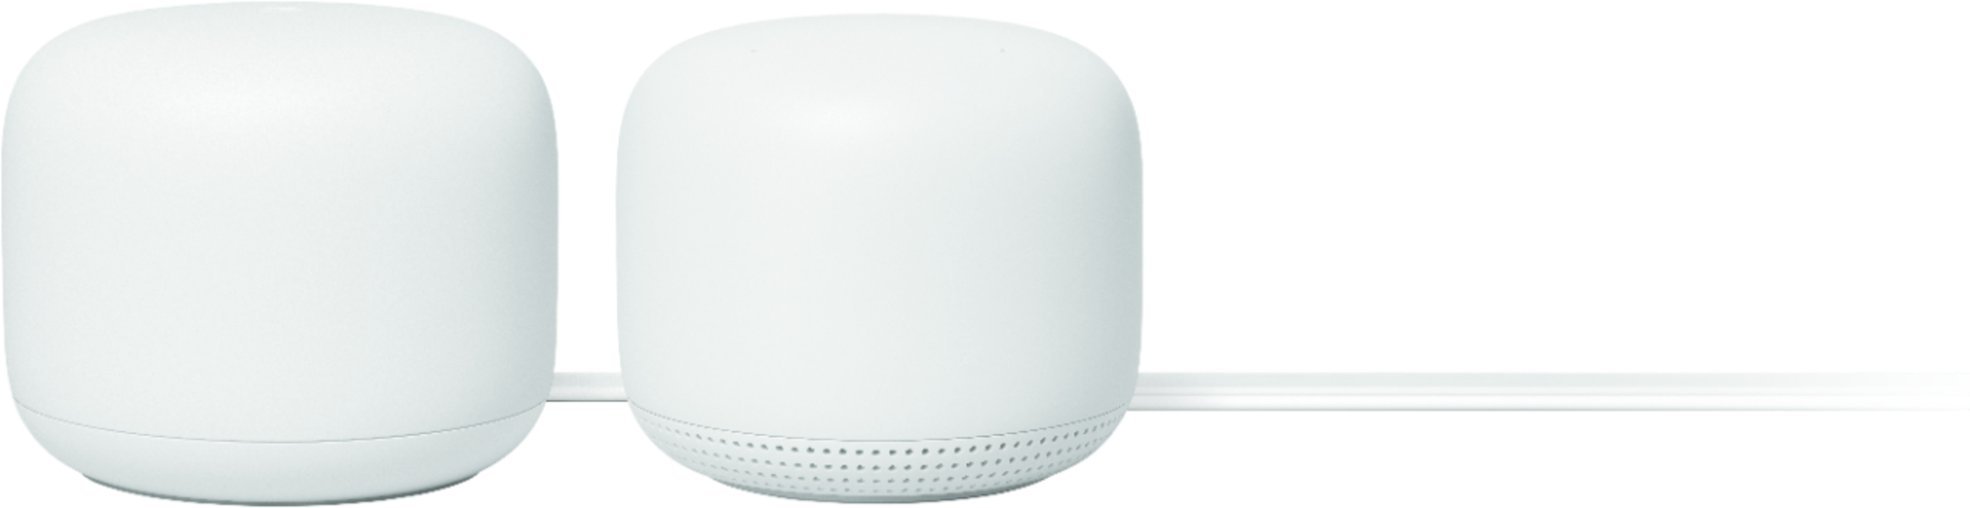 Google Nest GA00823-US Wifi Router + 2 Points, White